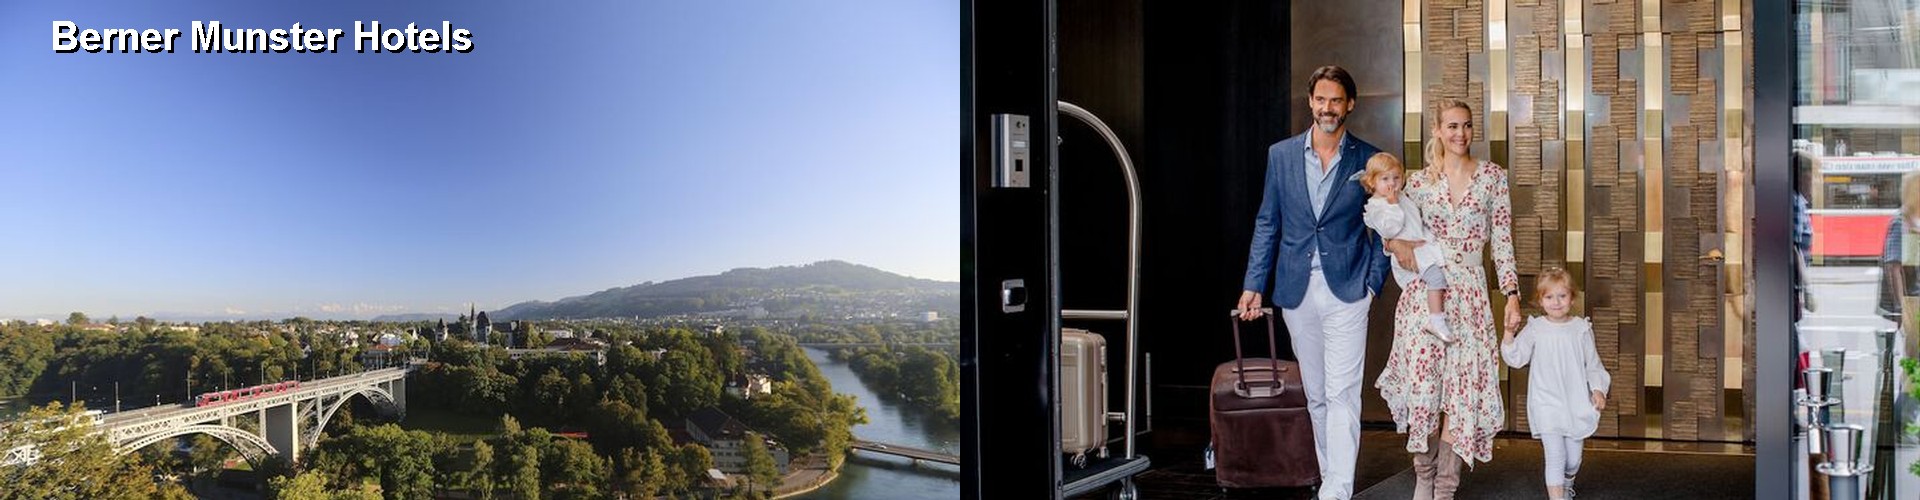 5 Best Hotels near Berner Munster